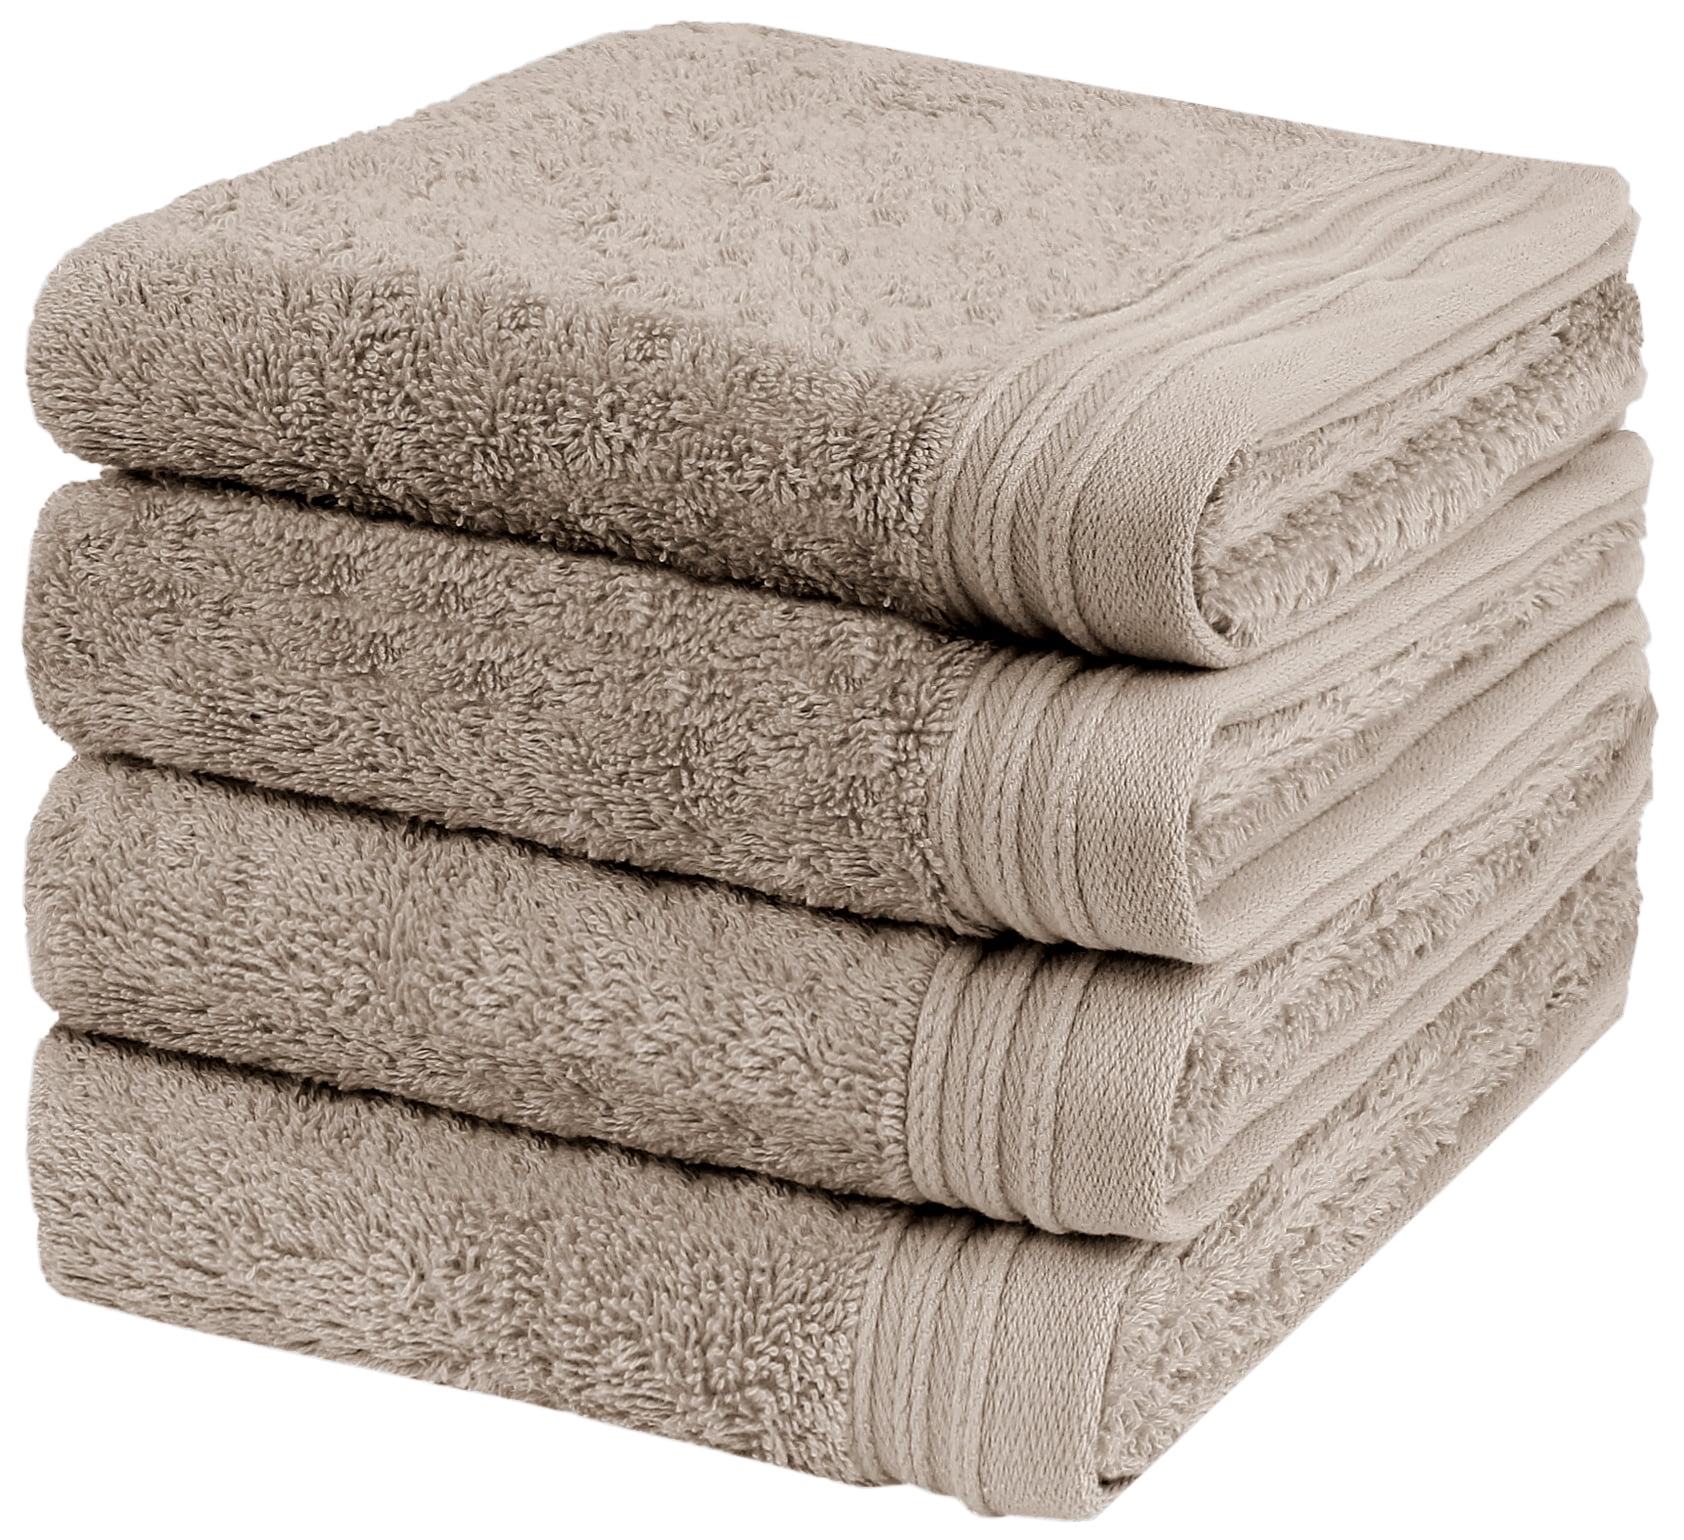 Weidemans 4 Piece Cotton Bath Towel Set, Sand Beige